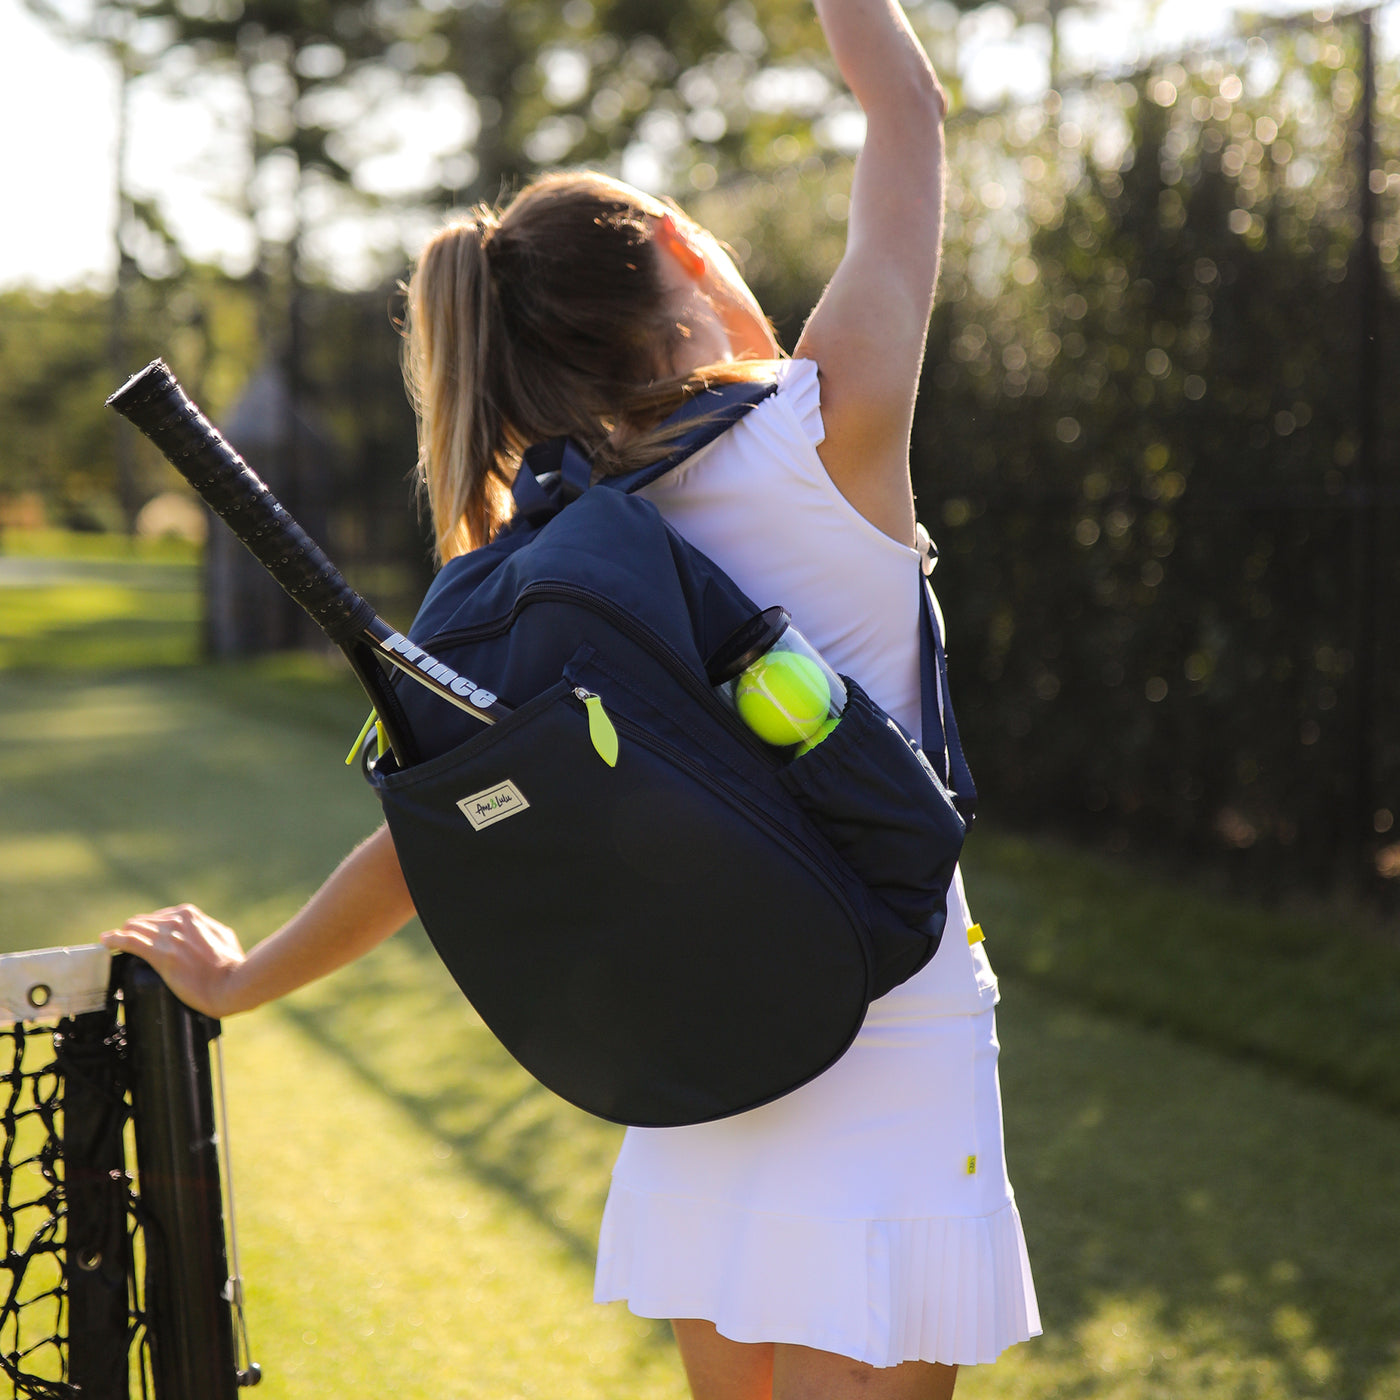 Model stands on grass tennis court wearing navy tennis backpack.